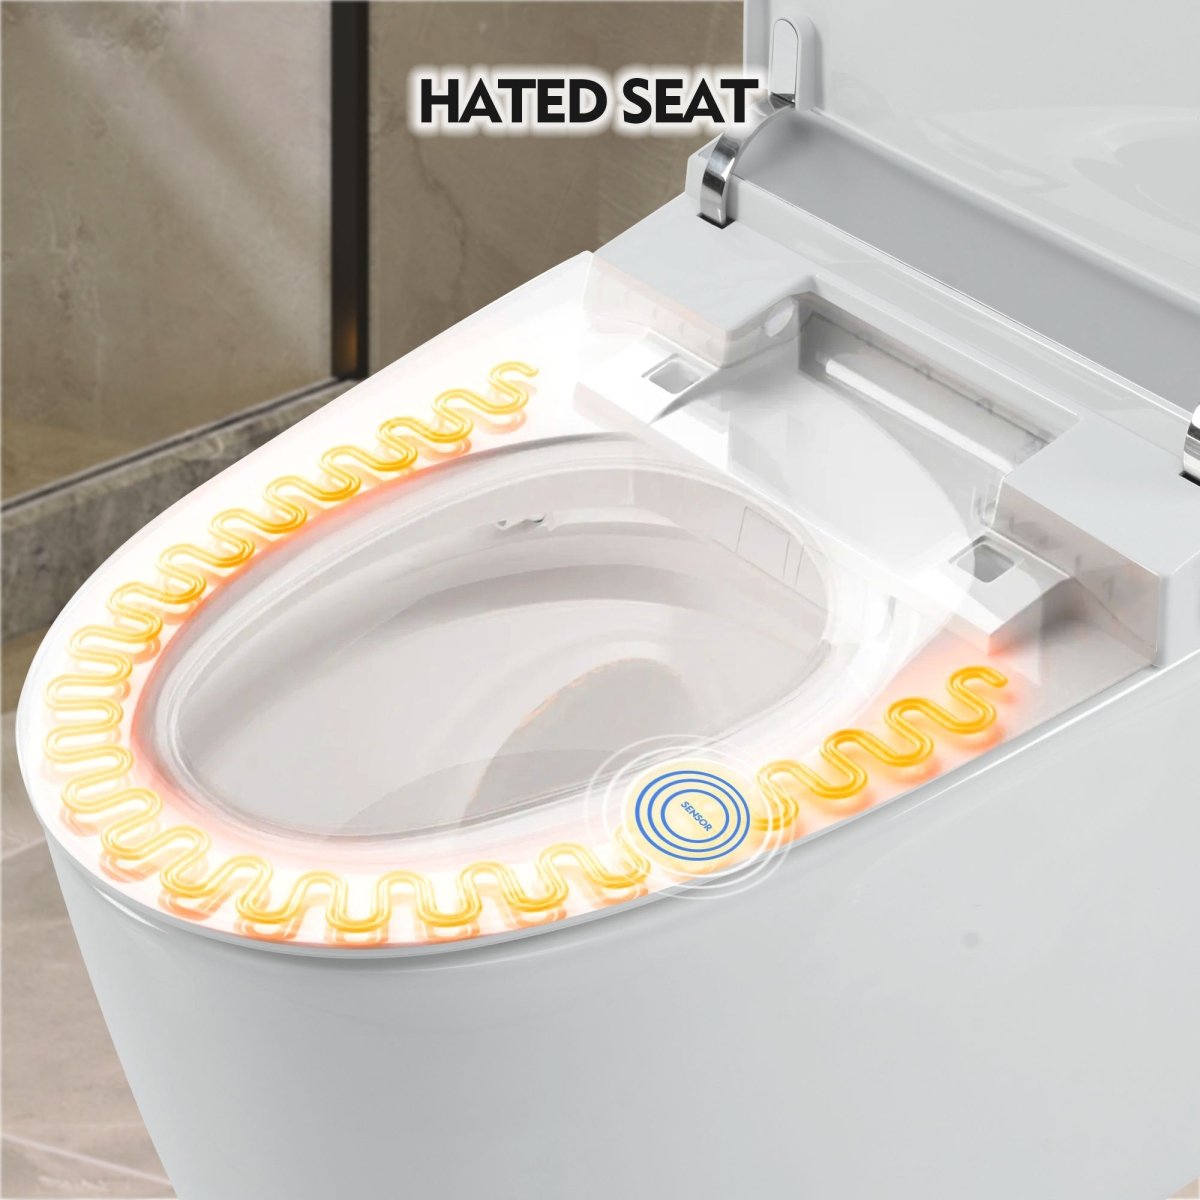 ExBrite Heated Seat Smart Toilet, Automatic Flush Tank, Foot sensor Flush, Night Light, Knob Control, Power Outage Flushing, Soft Close